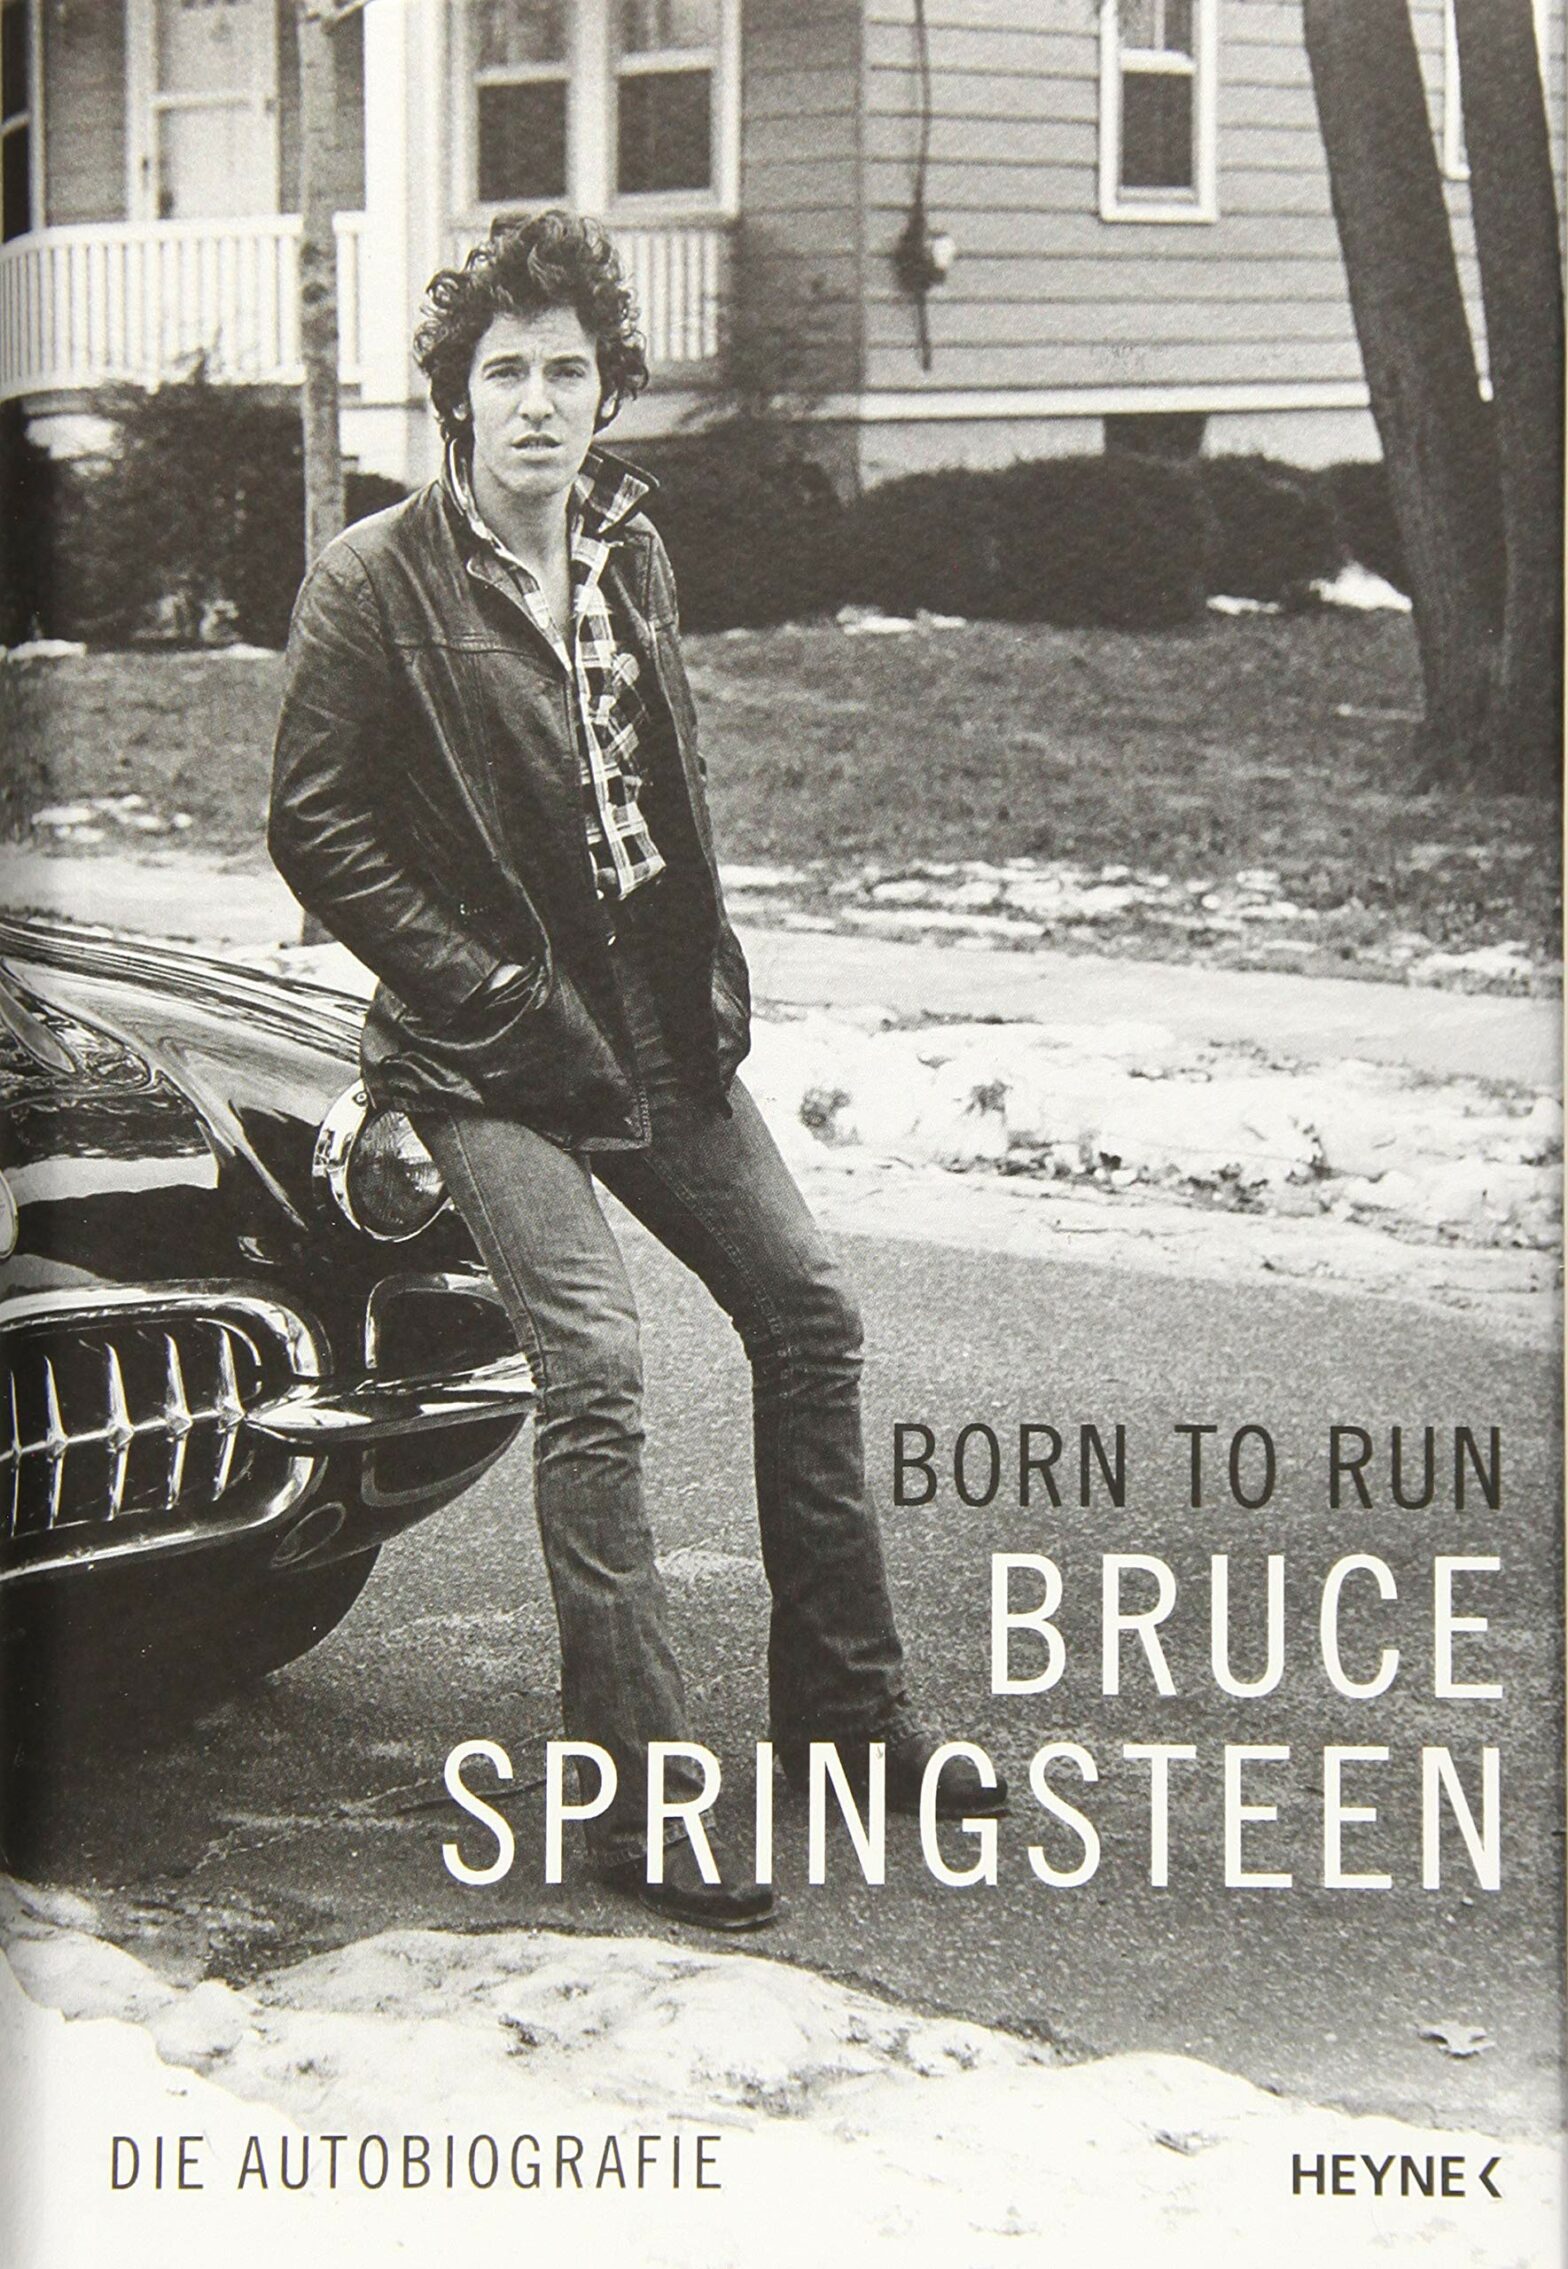 BORN TO RUN - Bruce Springsteen